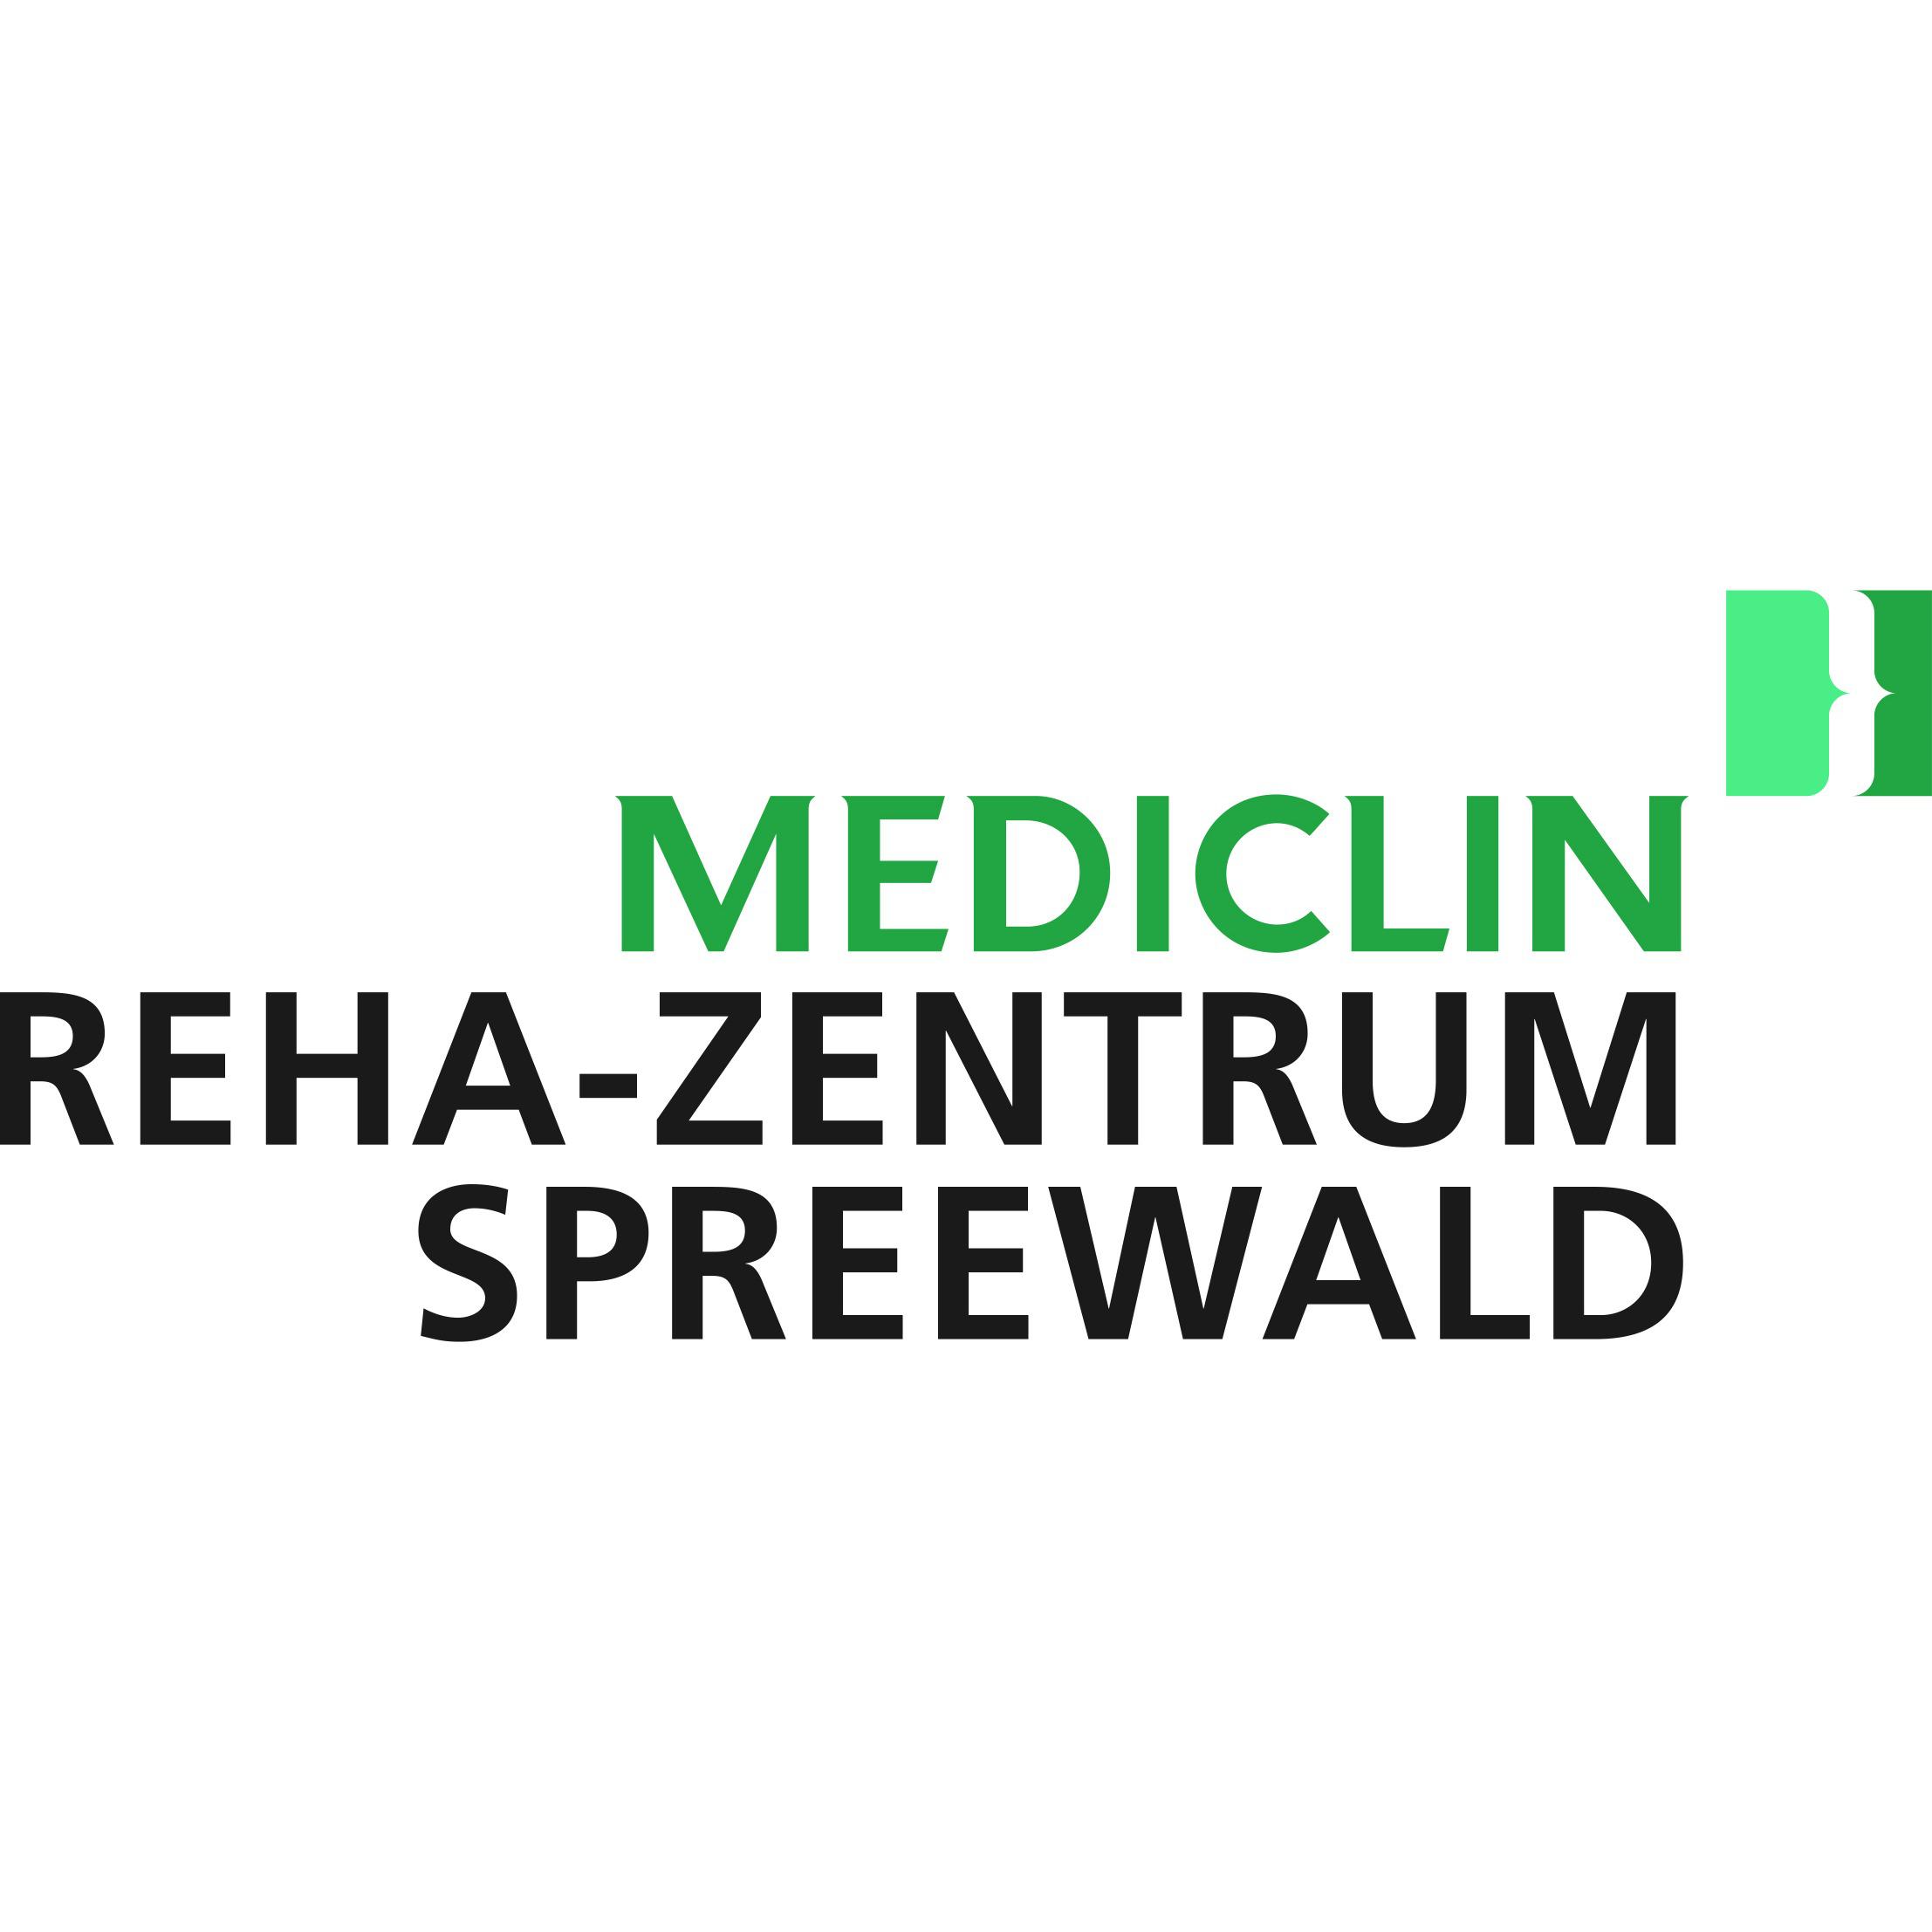 MEDICLIN Reha-Zentrum Spreewald Logo